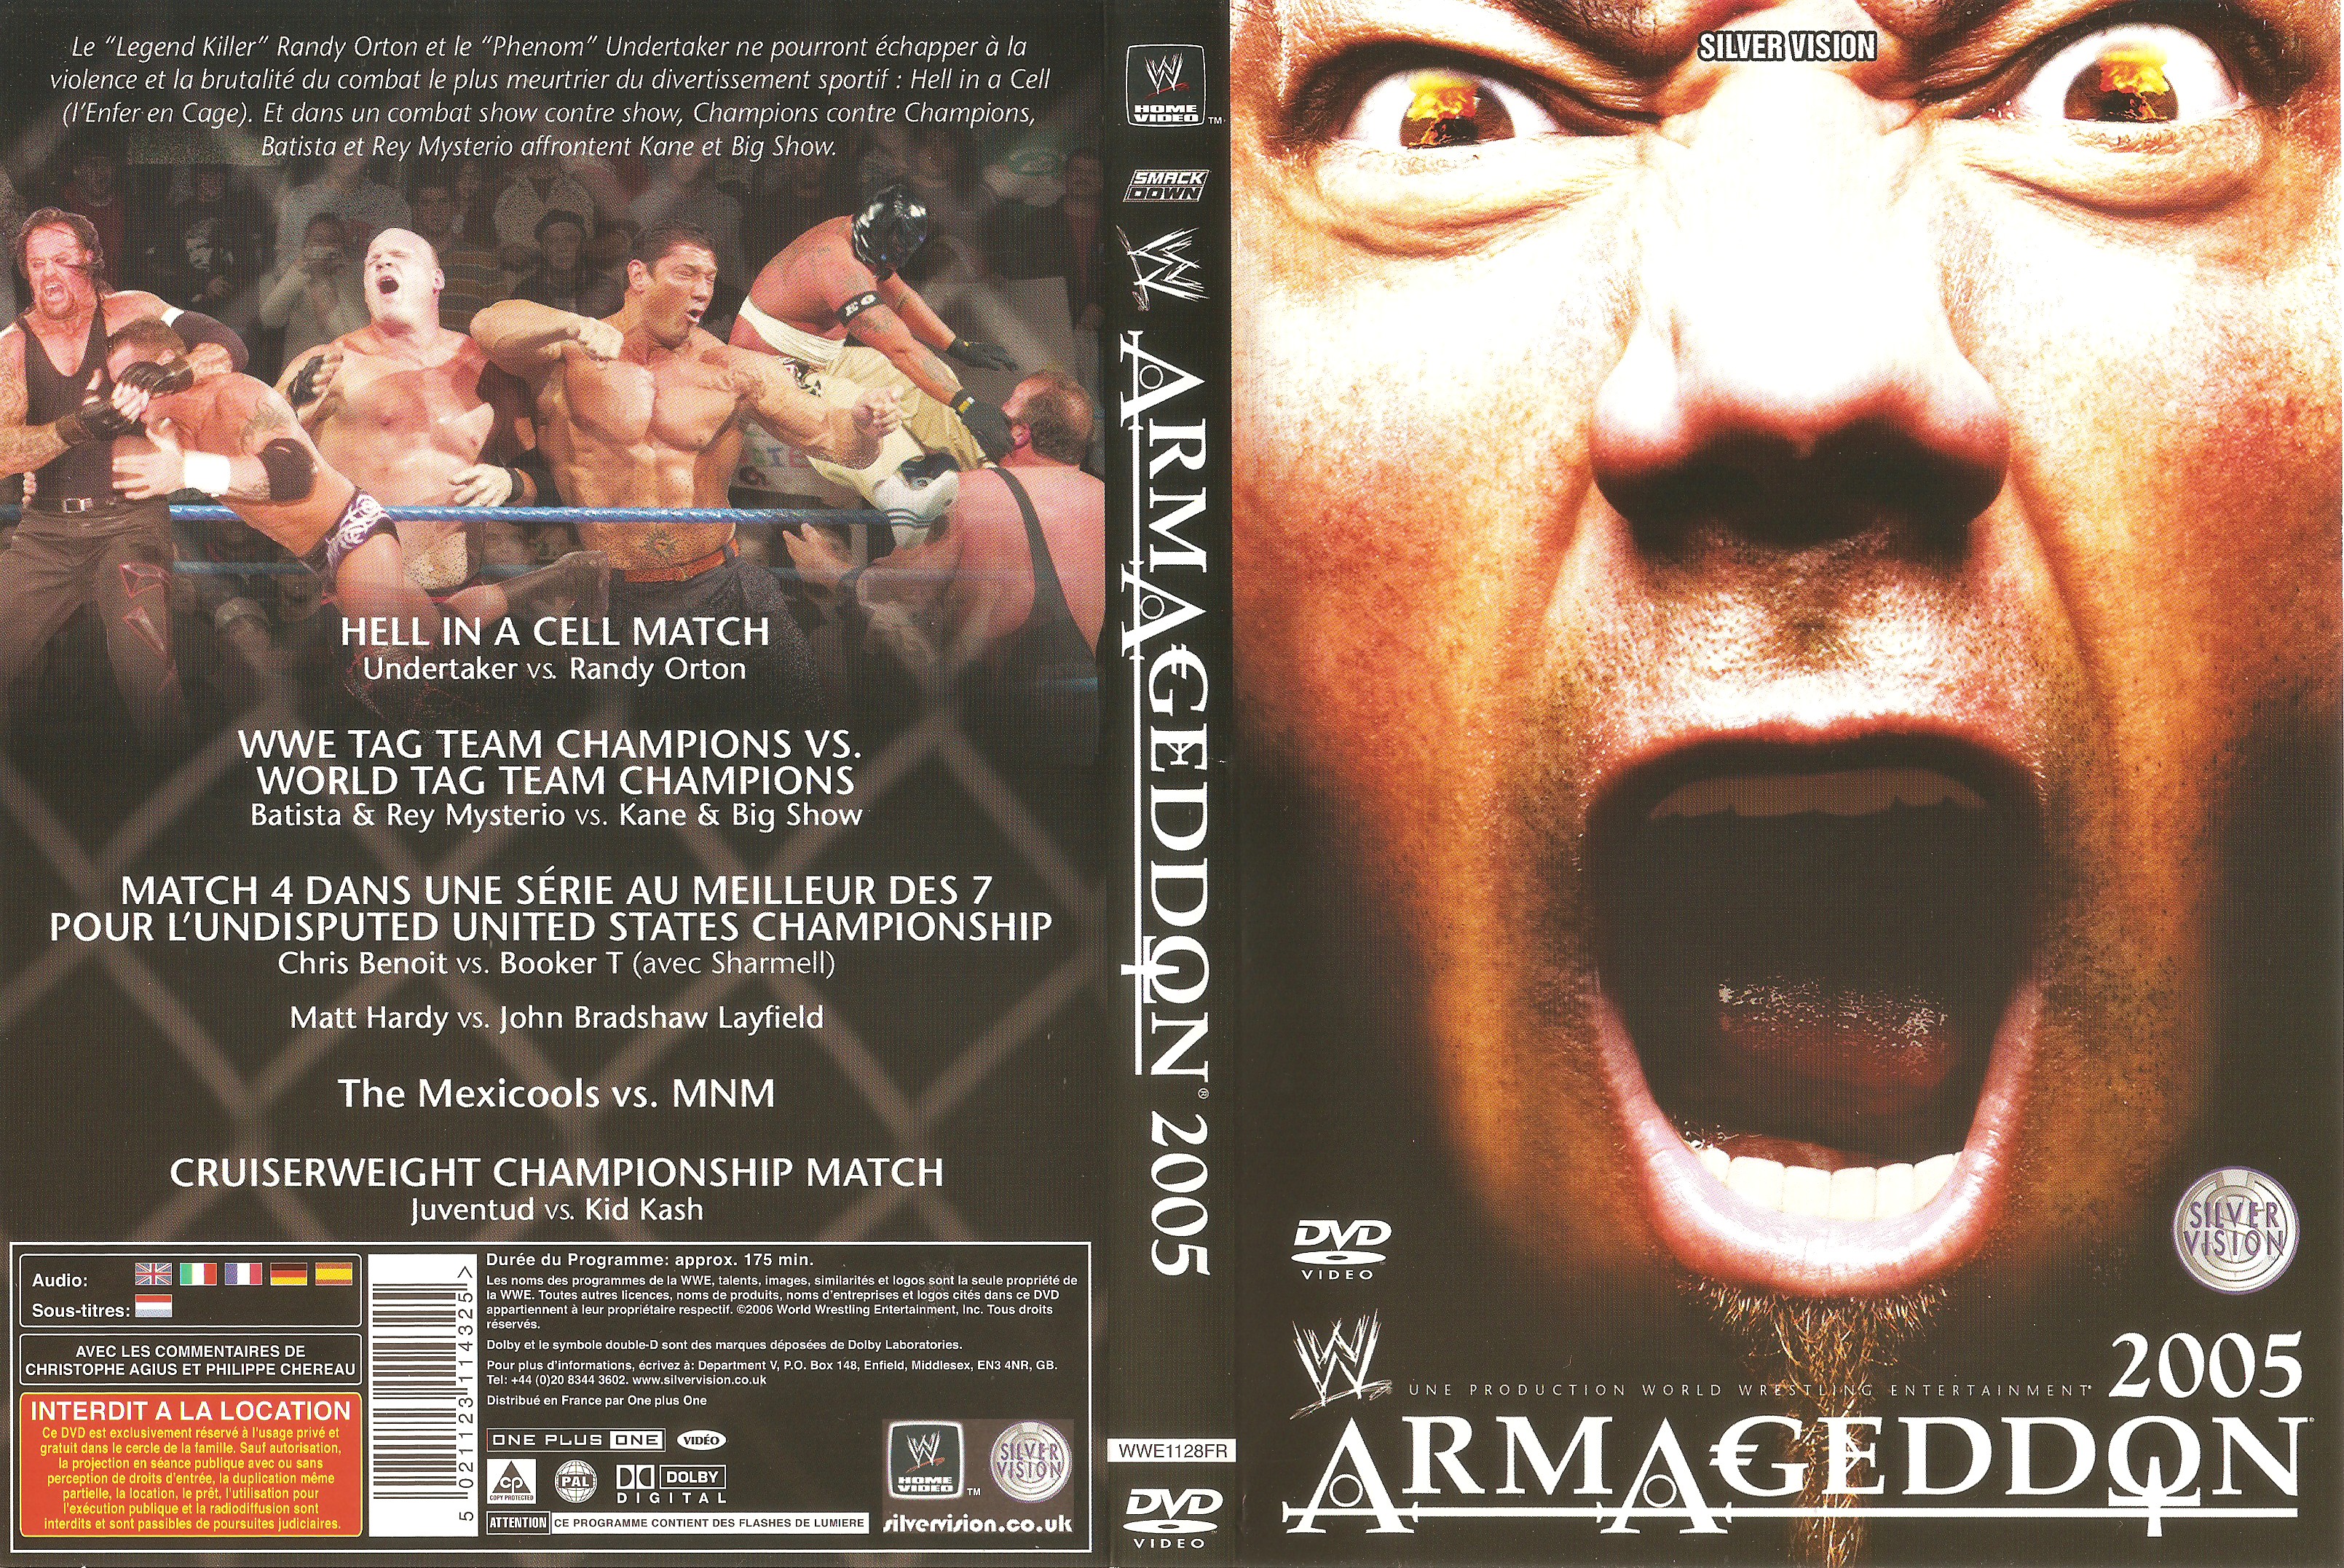 Jaquette DVD WWE Armageddon 2005